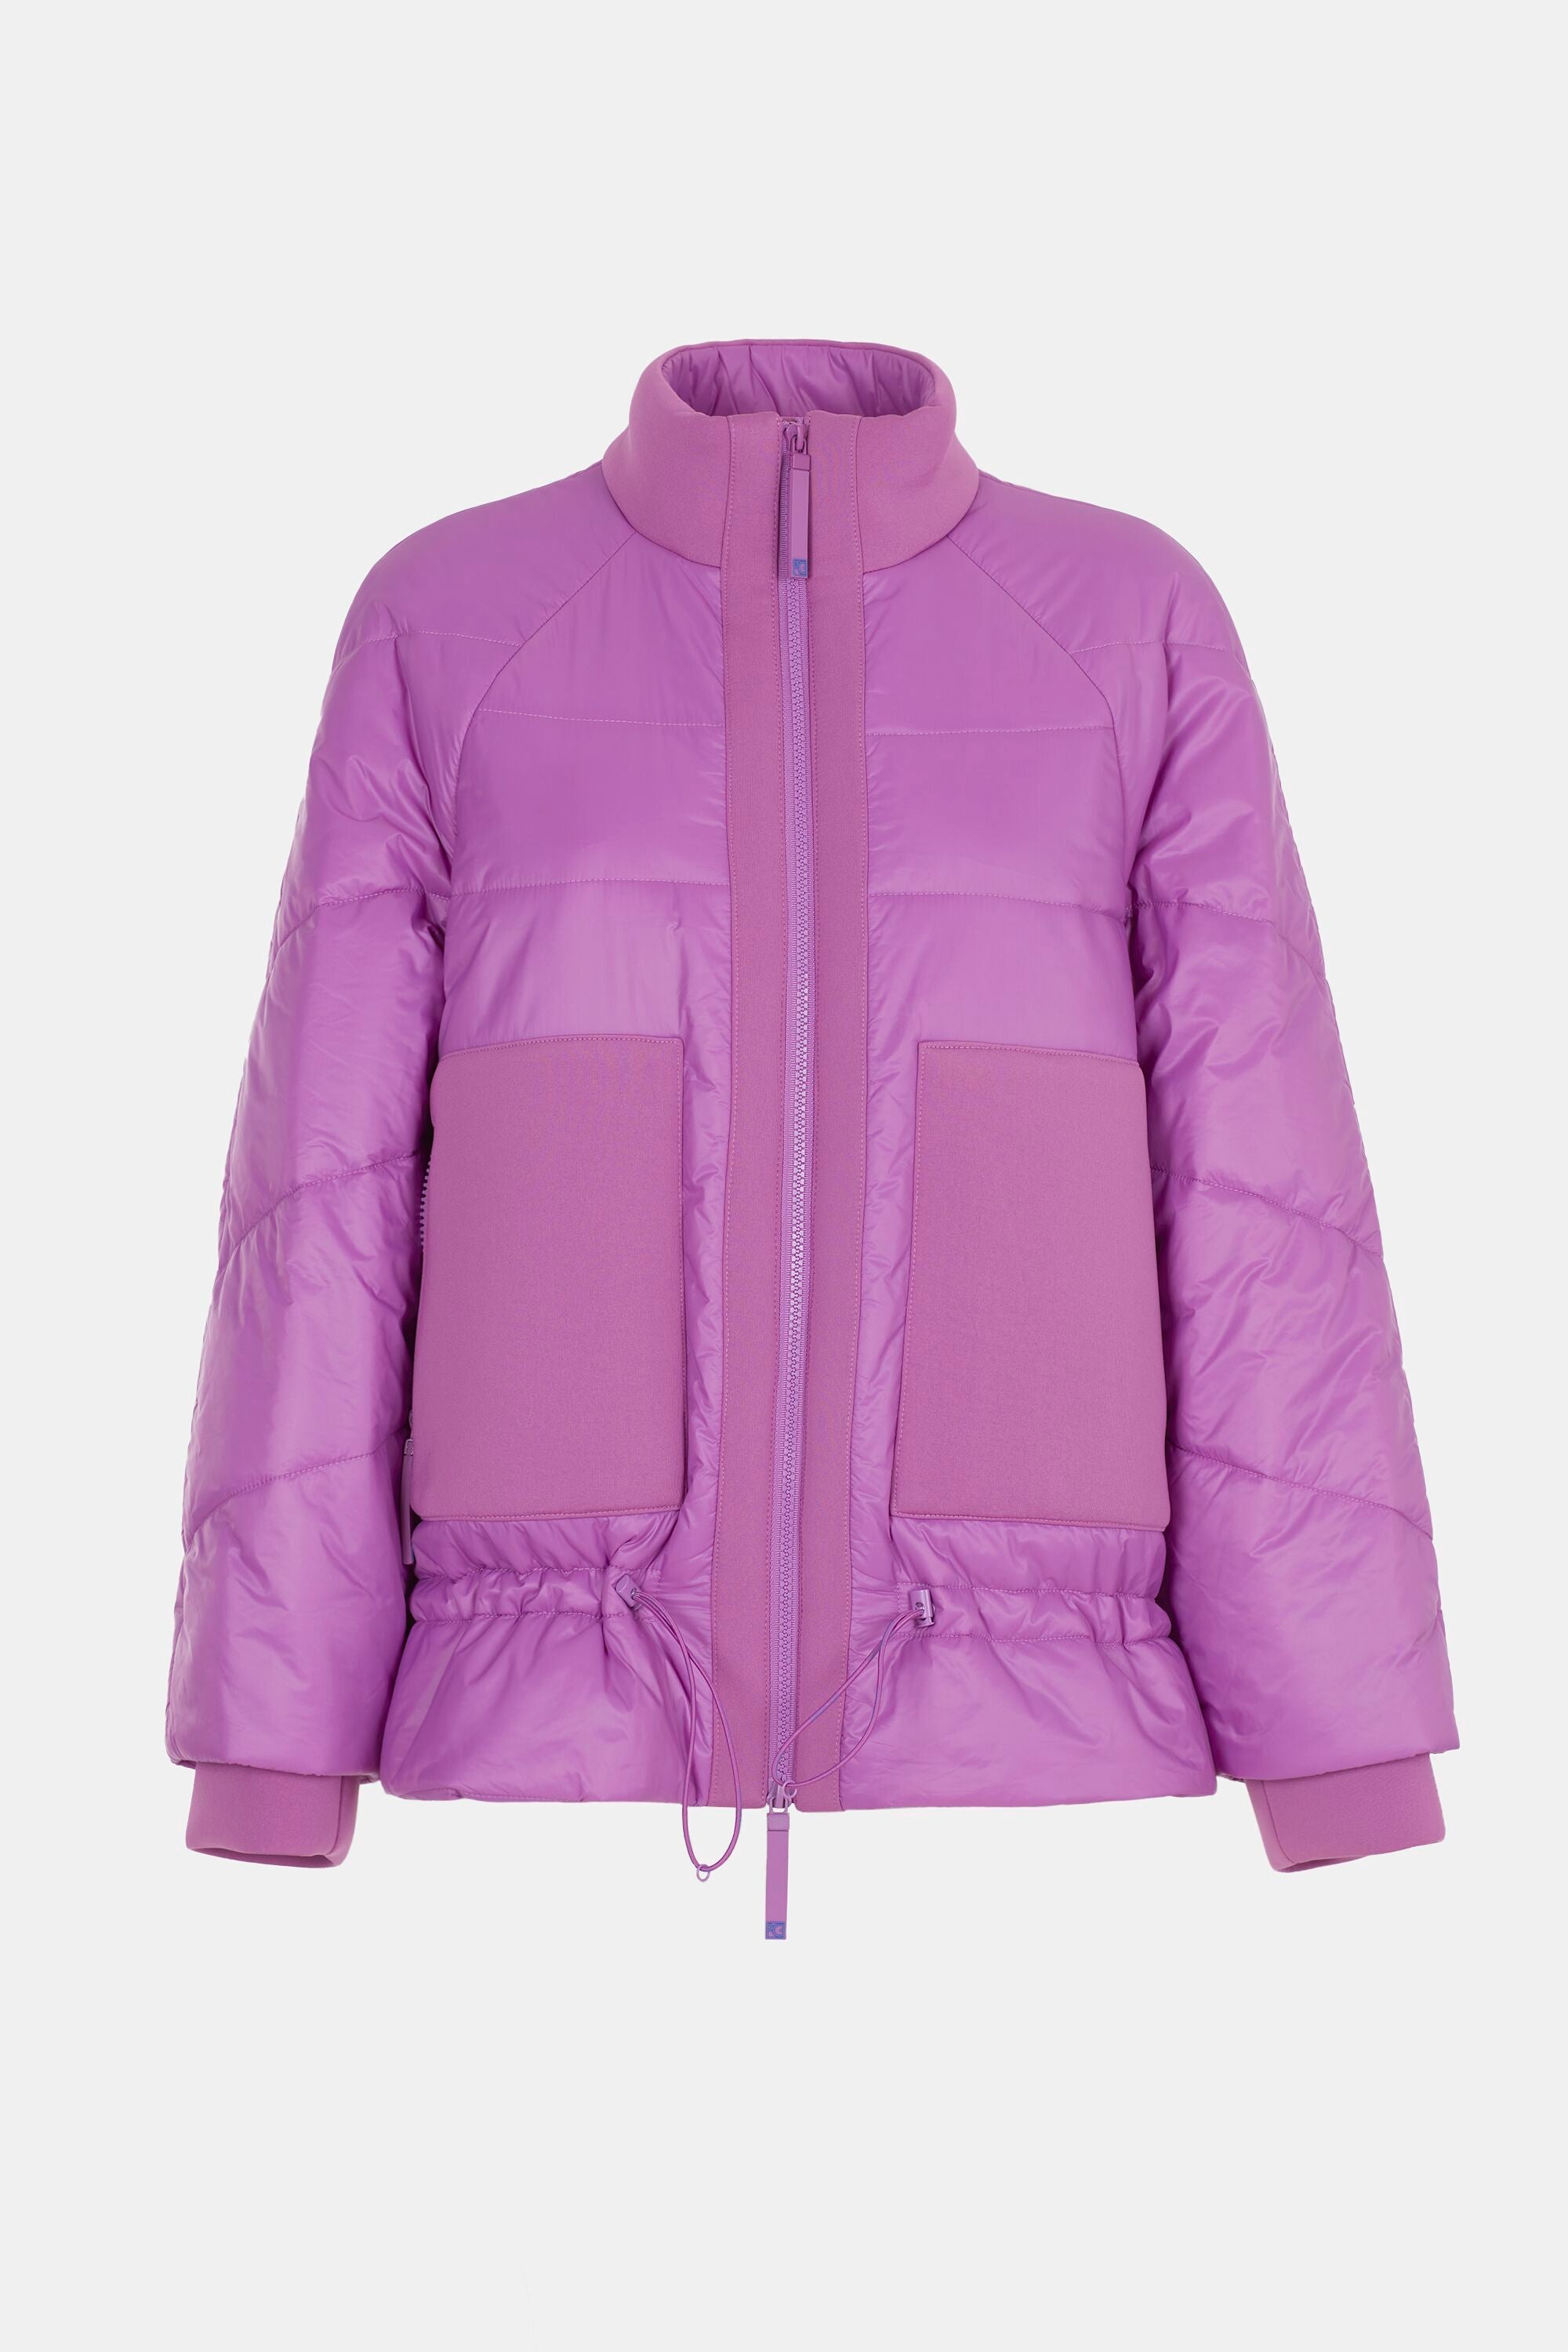 and Cocoon Belgium Purificacion Garcia pink - nylon jacket neoprene